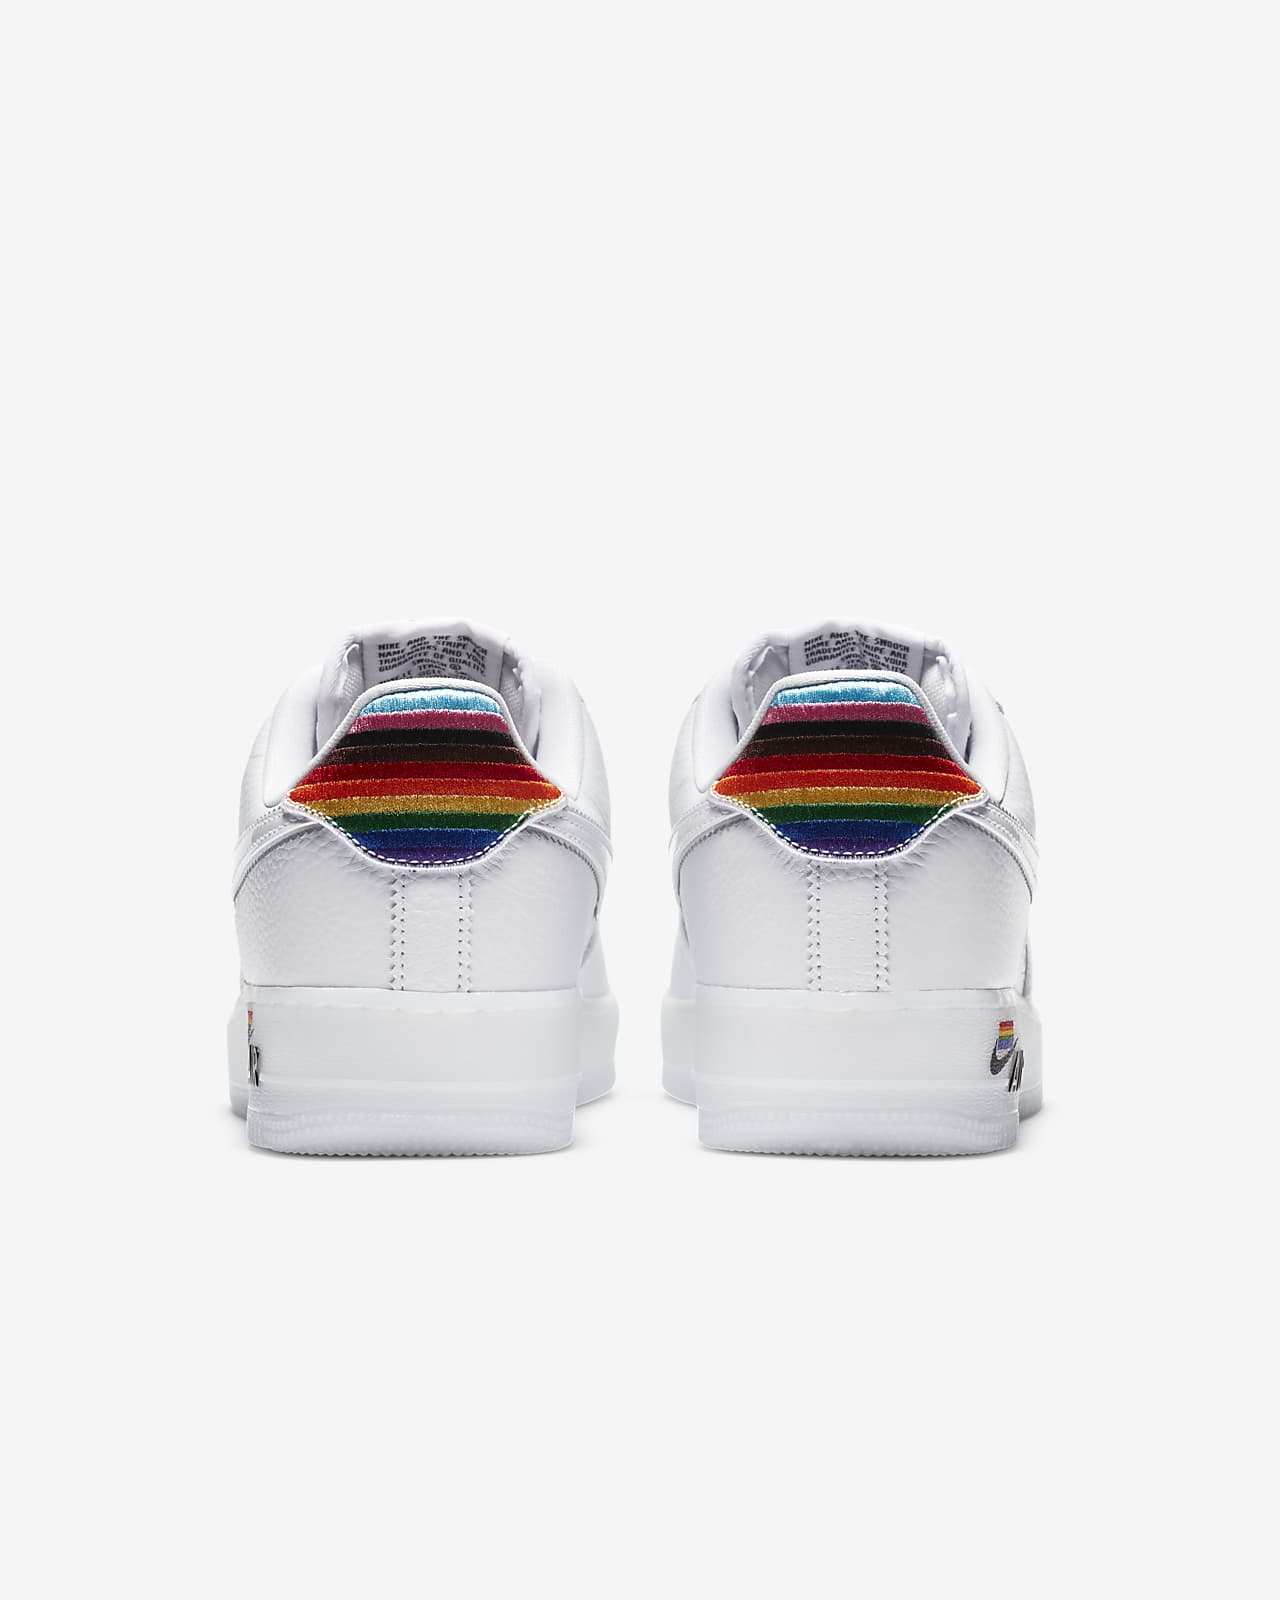 nike betrue rainbow shoes